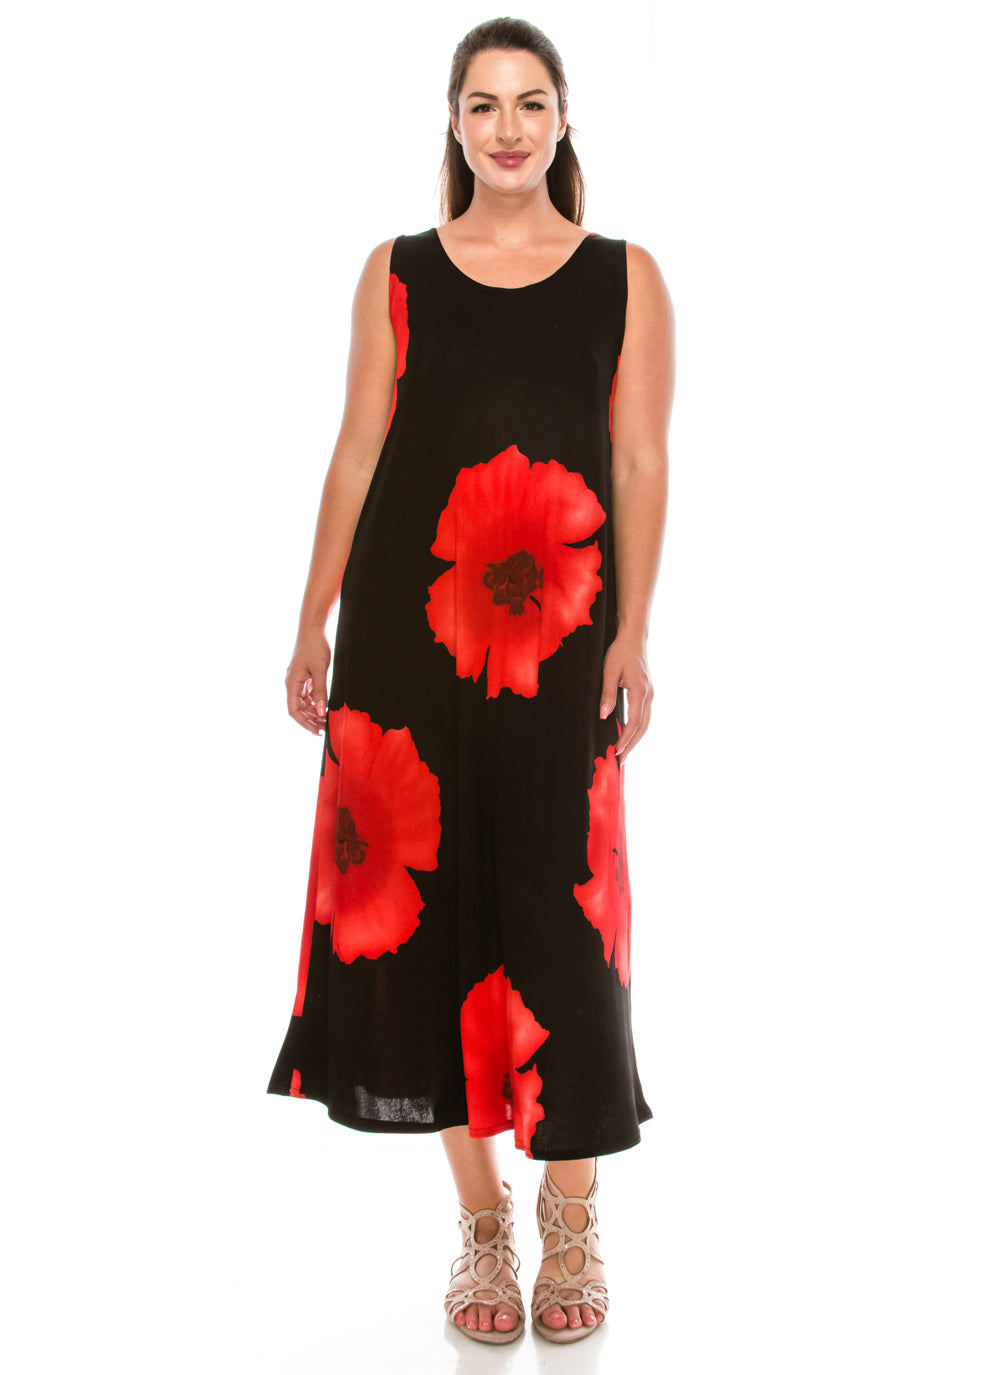 Jostar Women's Stretchy Long Tank Dress Print, 700BN-TP-W113 - Jostar Online